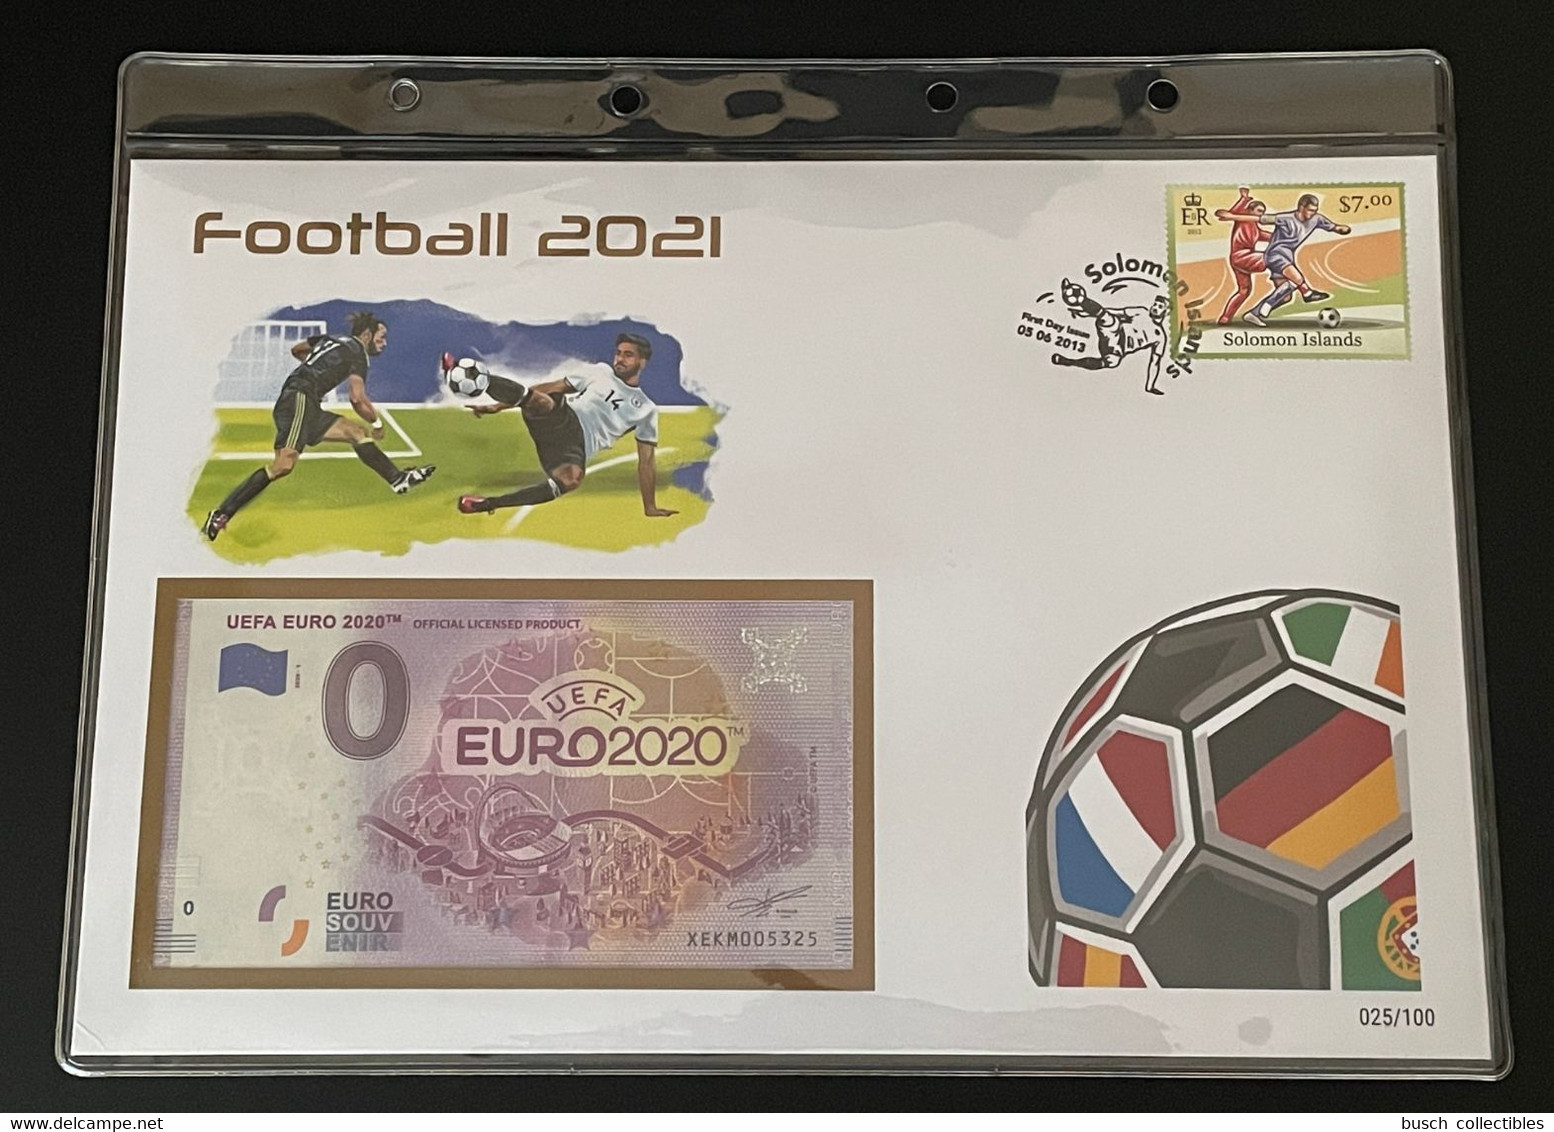 Euro Souvenir Banknote Cover Football 2021 Euro 2020 Football Fußball Soccer EM Solomon Banknotenbrief - Fußball-Europameisterschaft (UEFA)